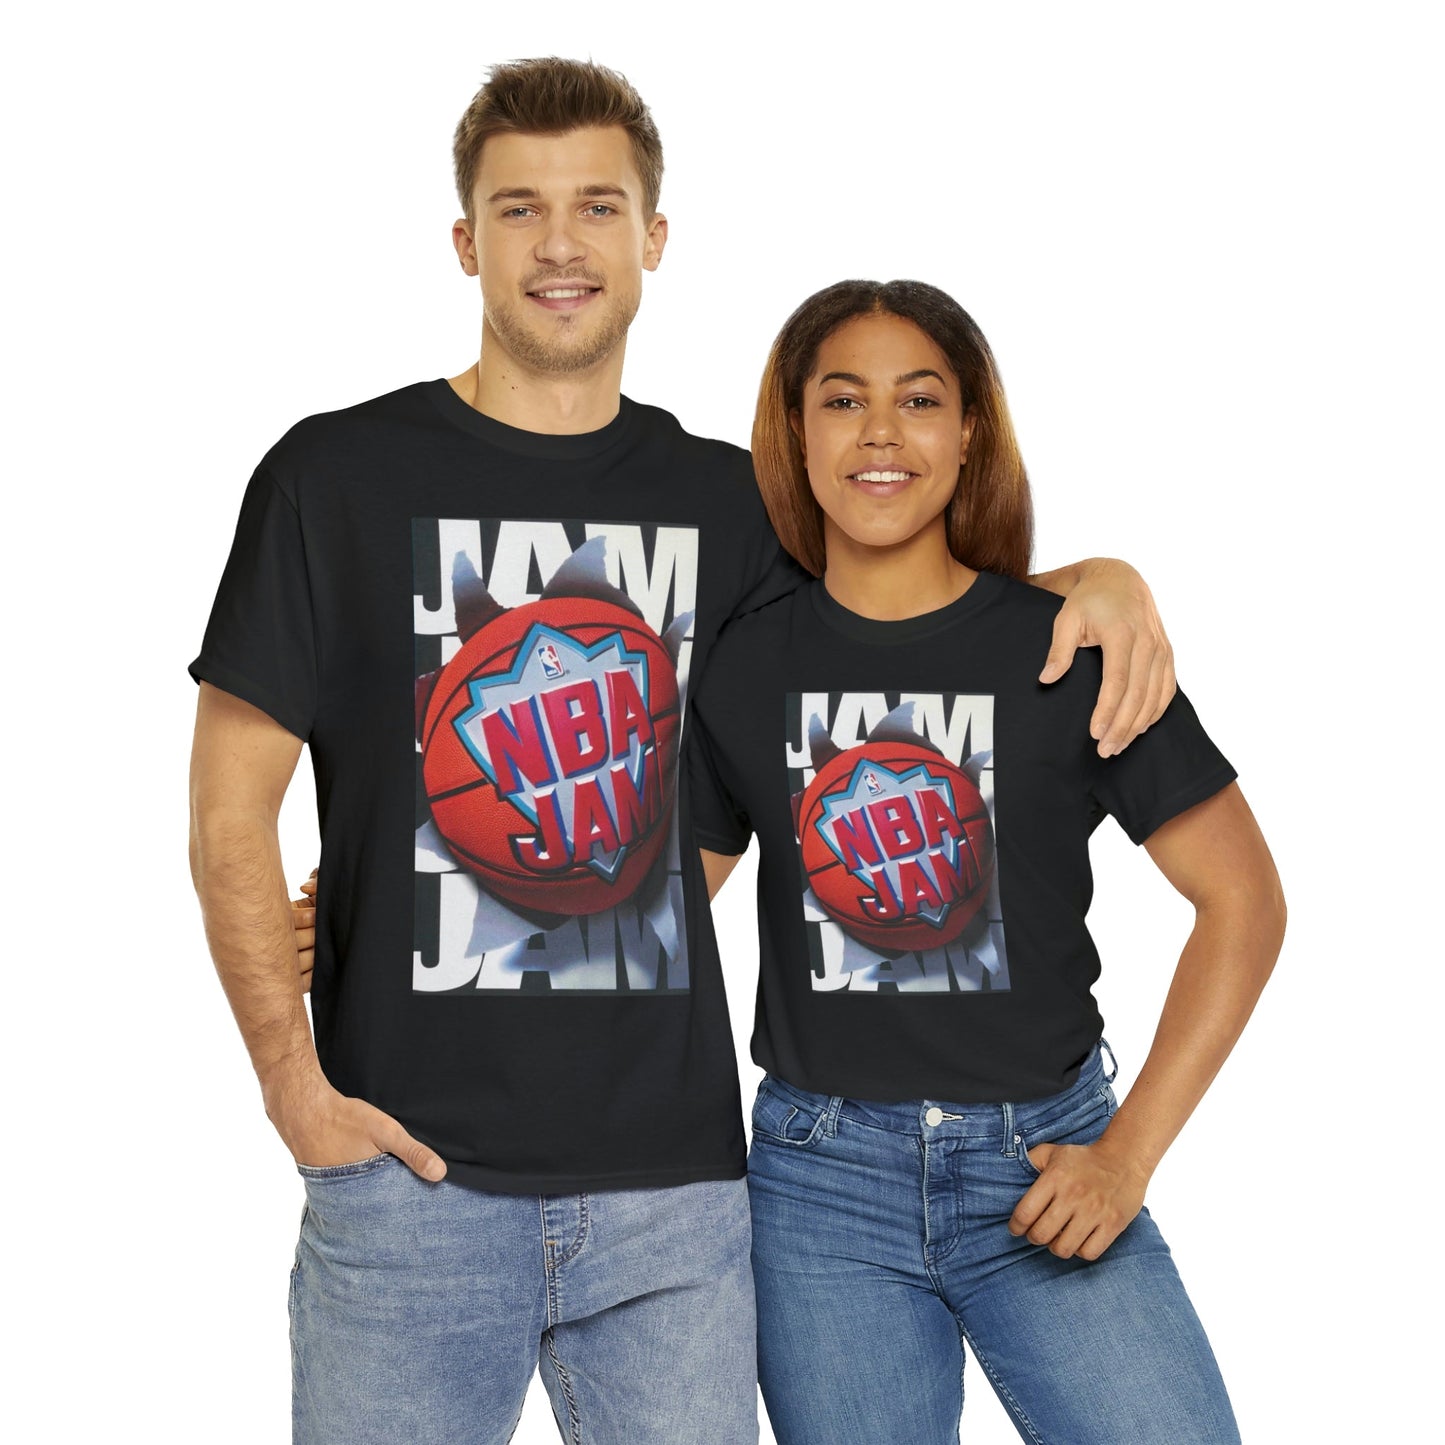 NBA Jam Arcade Video Game T-Shirt - RetroTeeShop